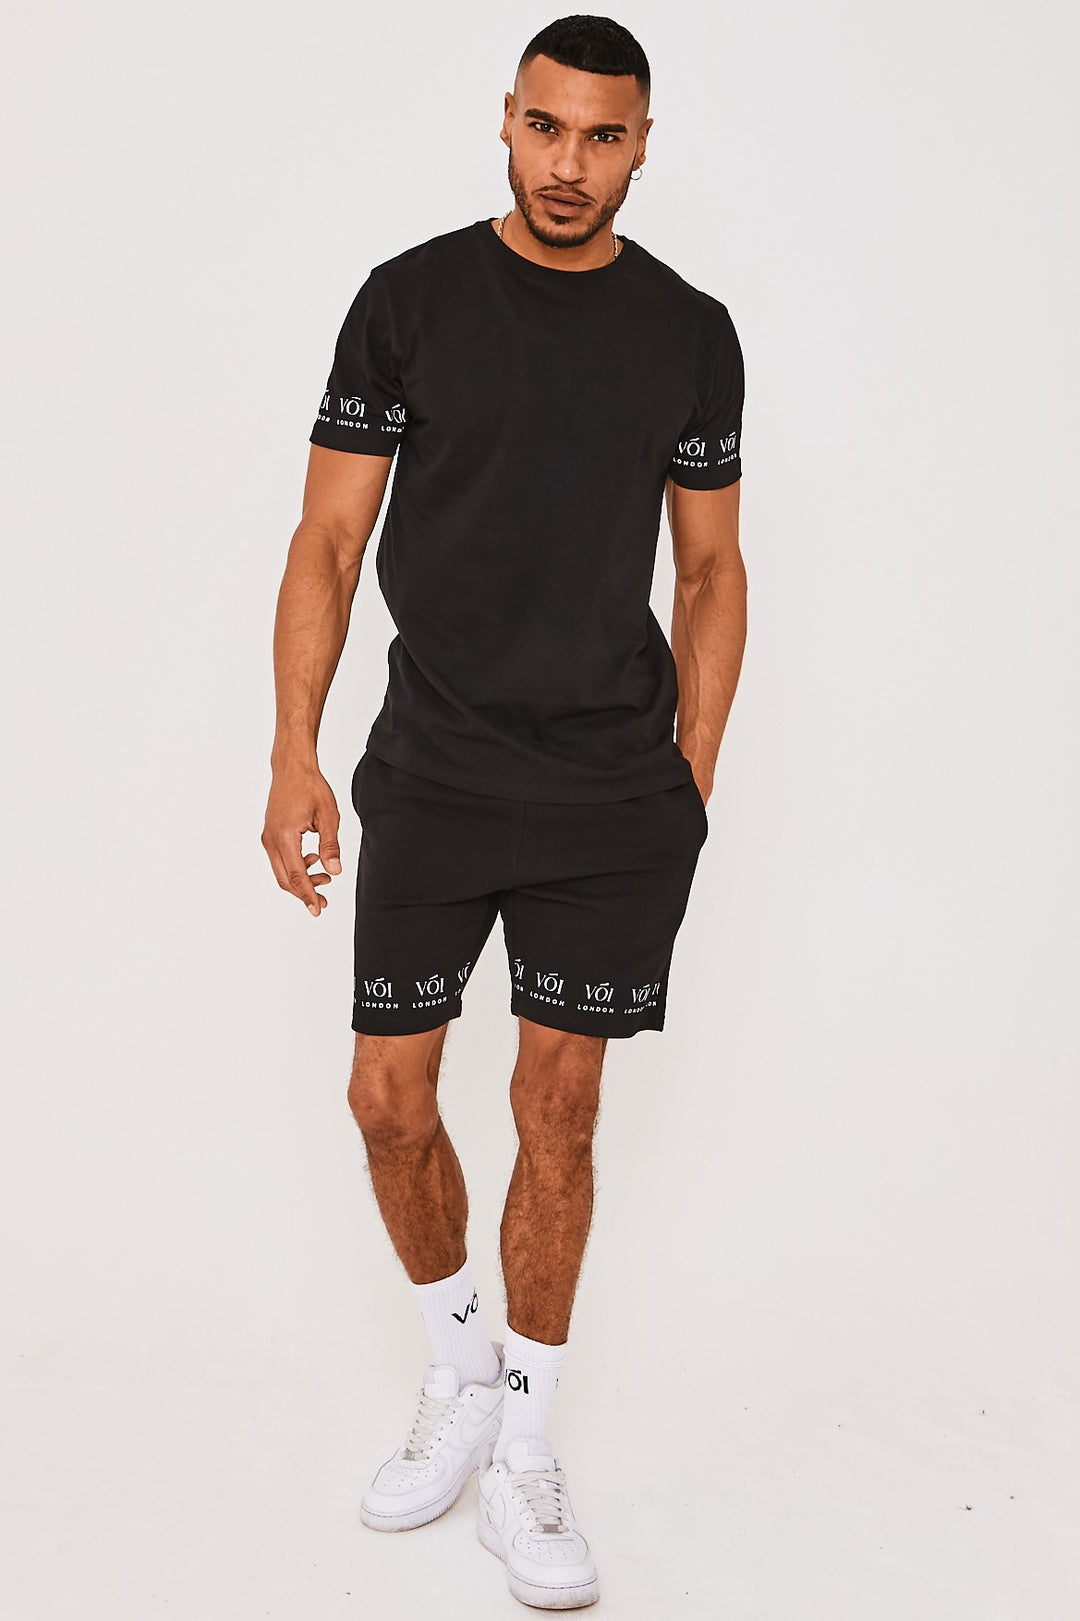 Swiss Cottage T-Shirt & Short Set - Black